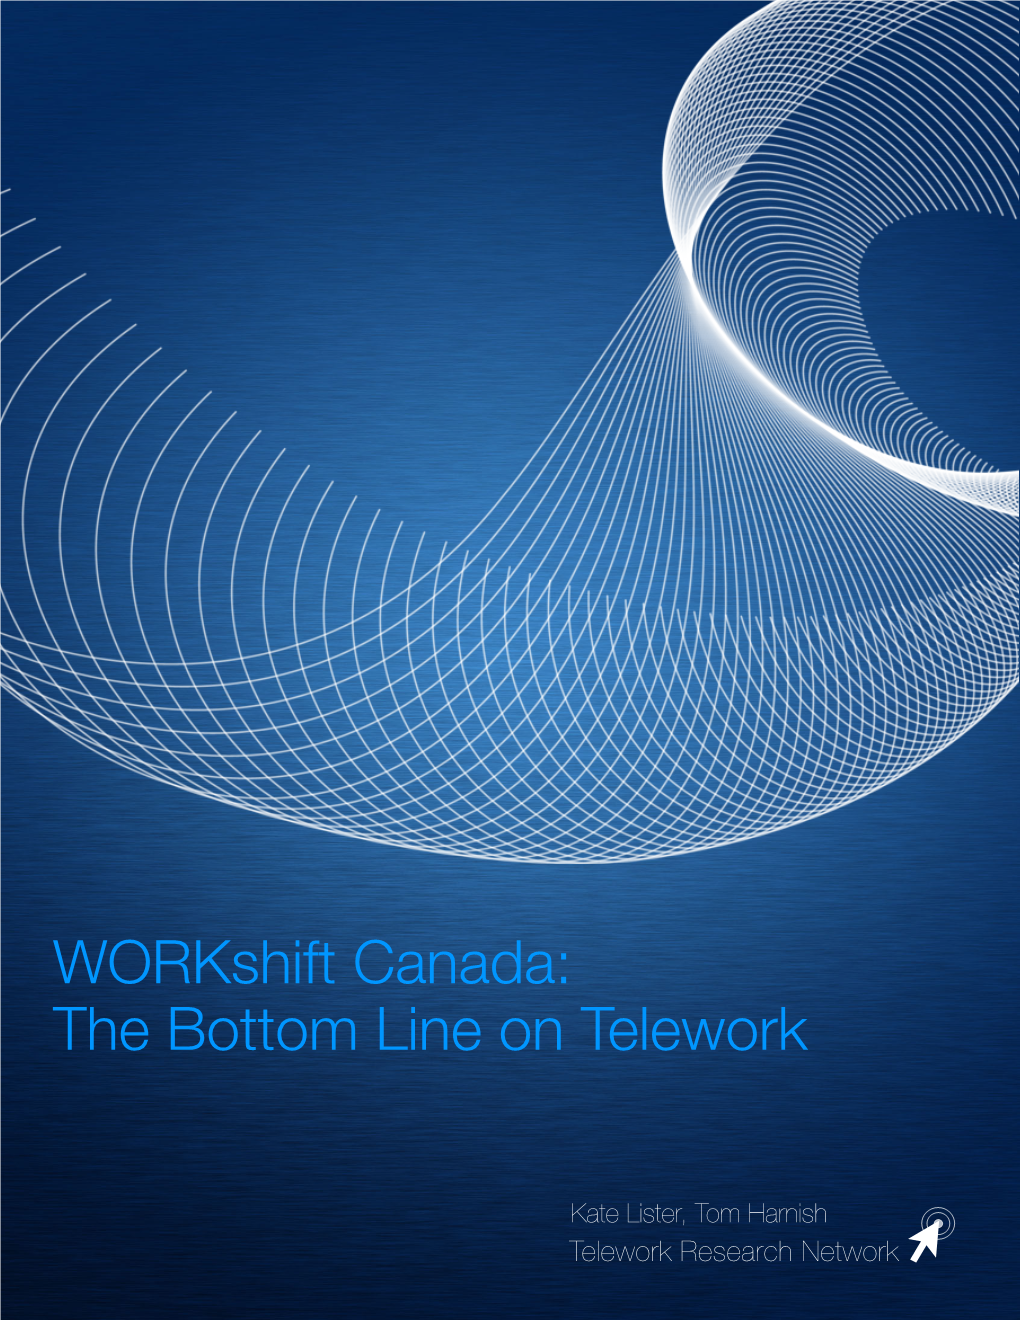 Workshift Canada: the Bottom Line on Telework